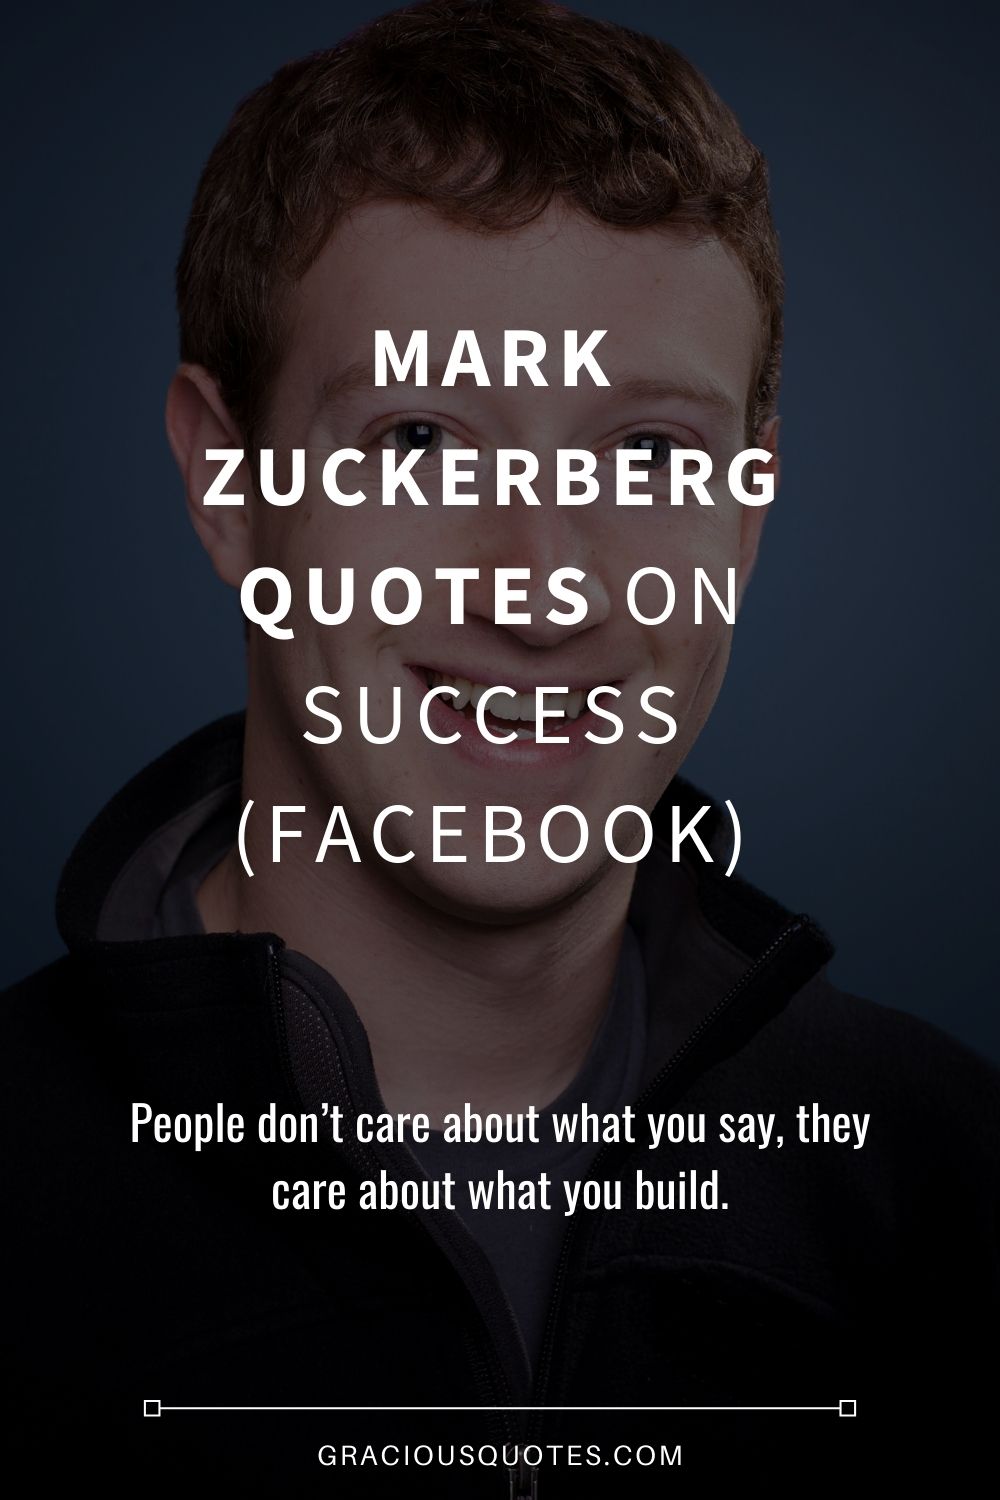 Mark Zuckerberg Quotes on Success (FACEBOOK) - Gracious Quotes